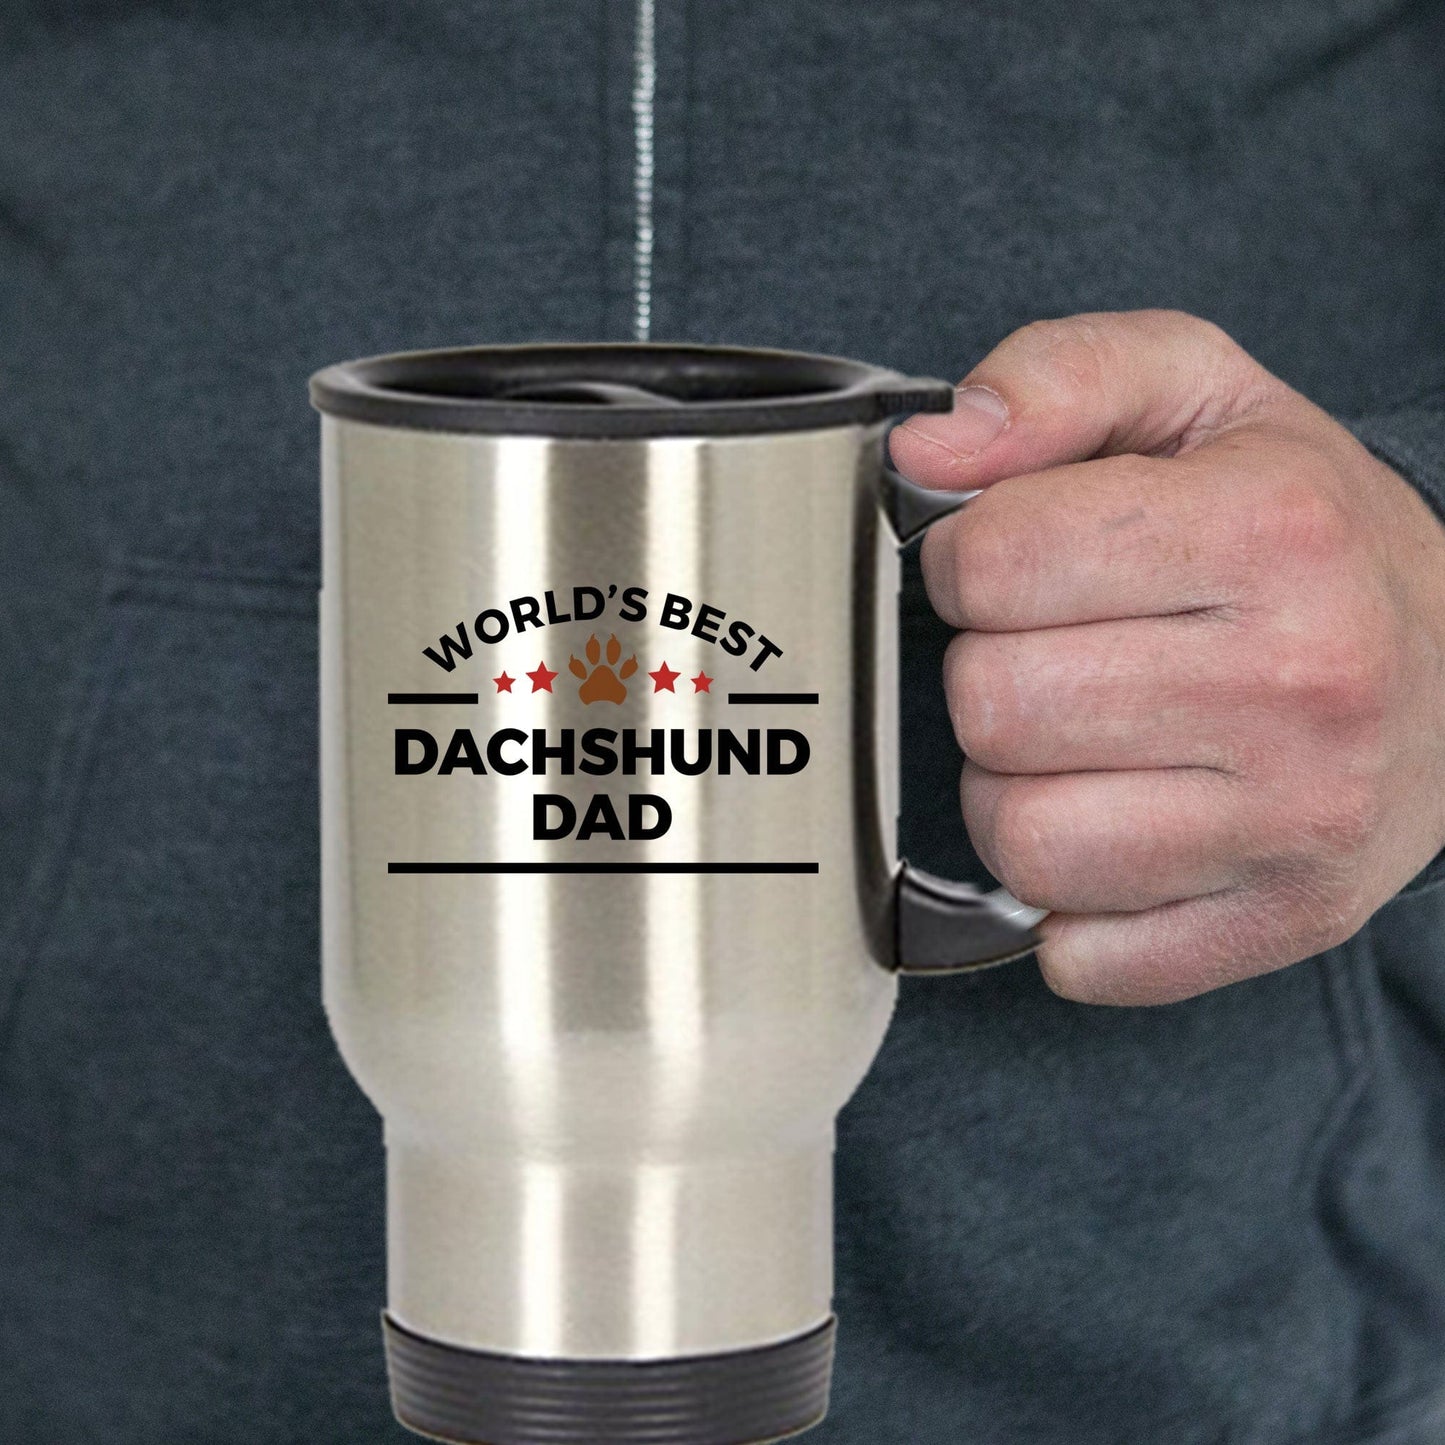 Dachshund Dog Lover Gift World's Best Dad Birthday Father's Day Stainless Steel Travel Coffee Mug